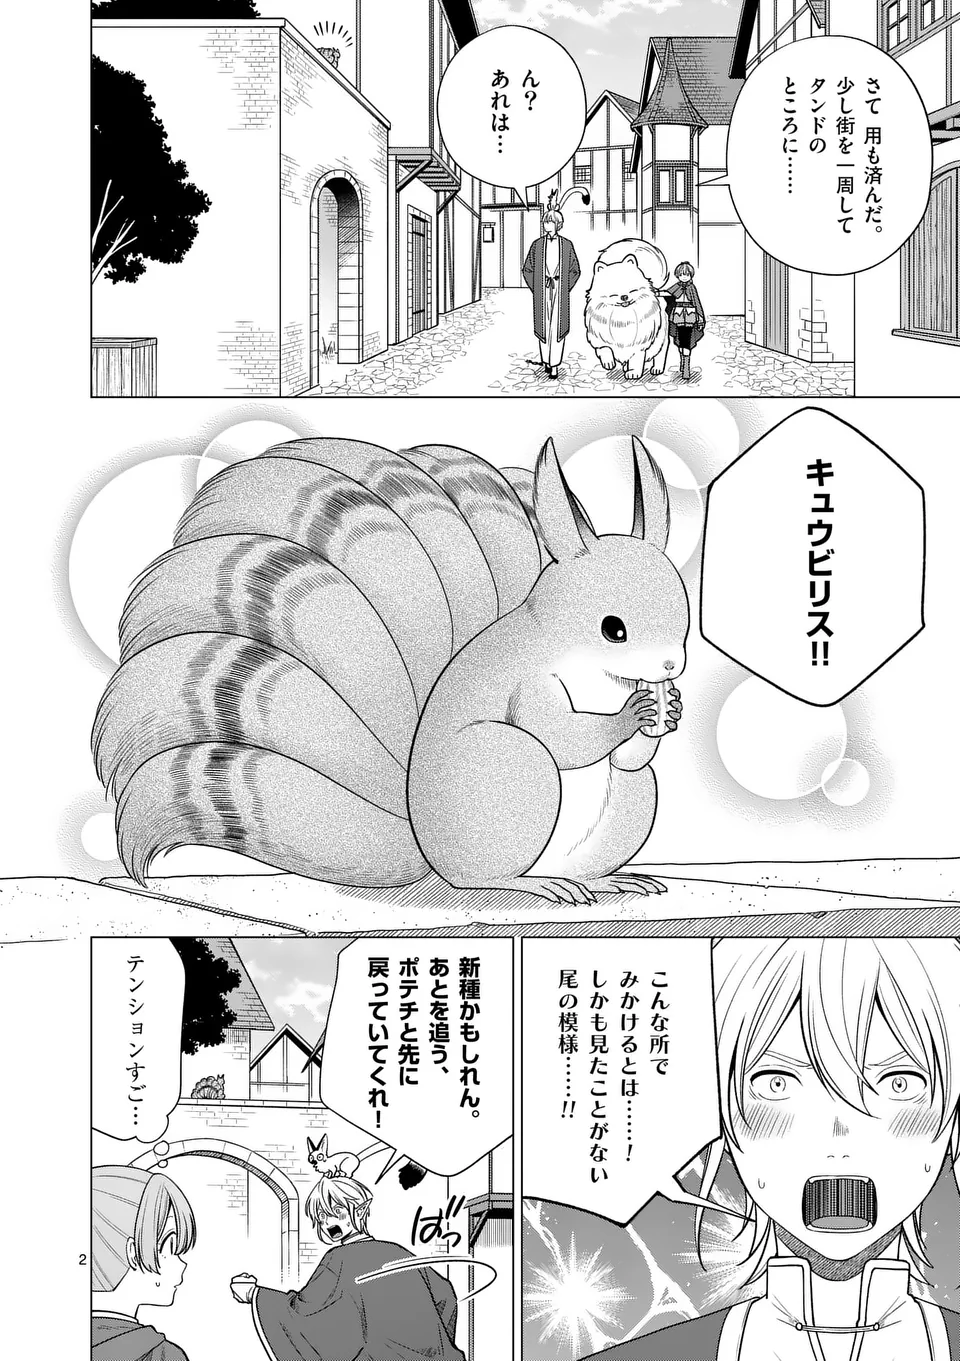 Isekai Pomeranian to Niji no Mofumofu Tabi - Chapter 8 - Page 2